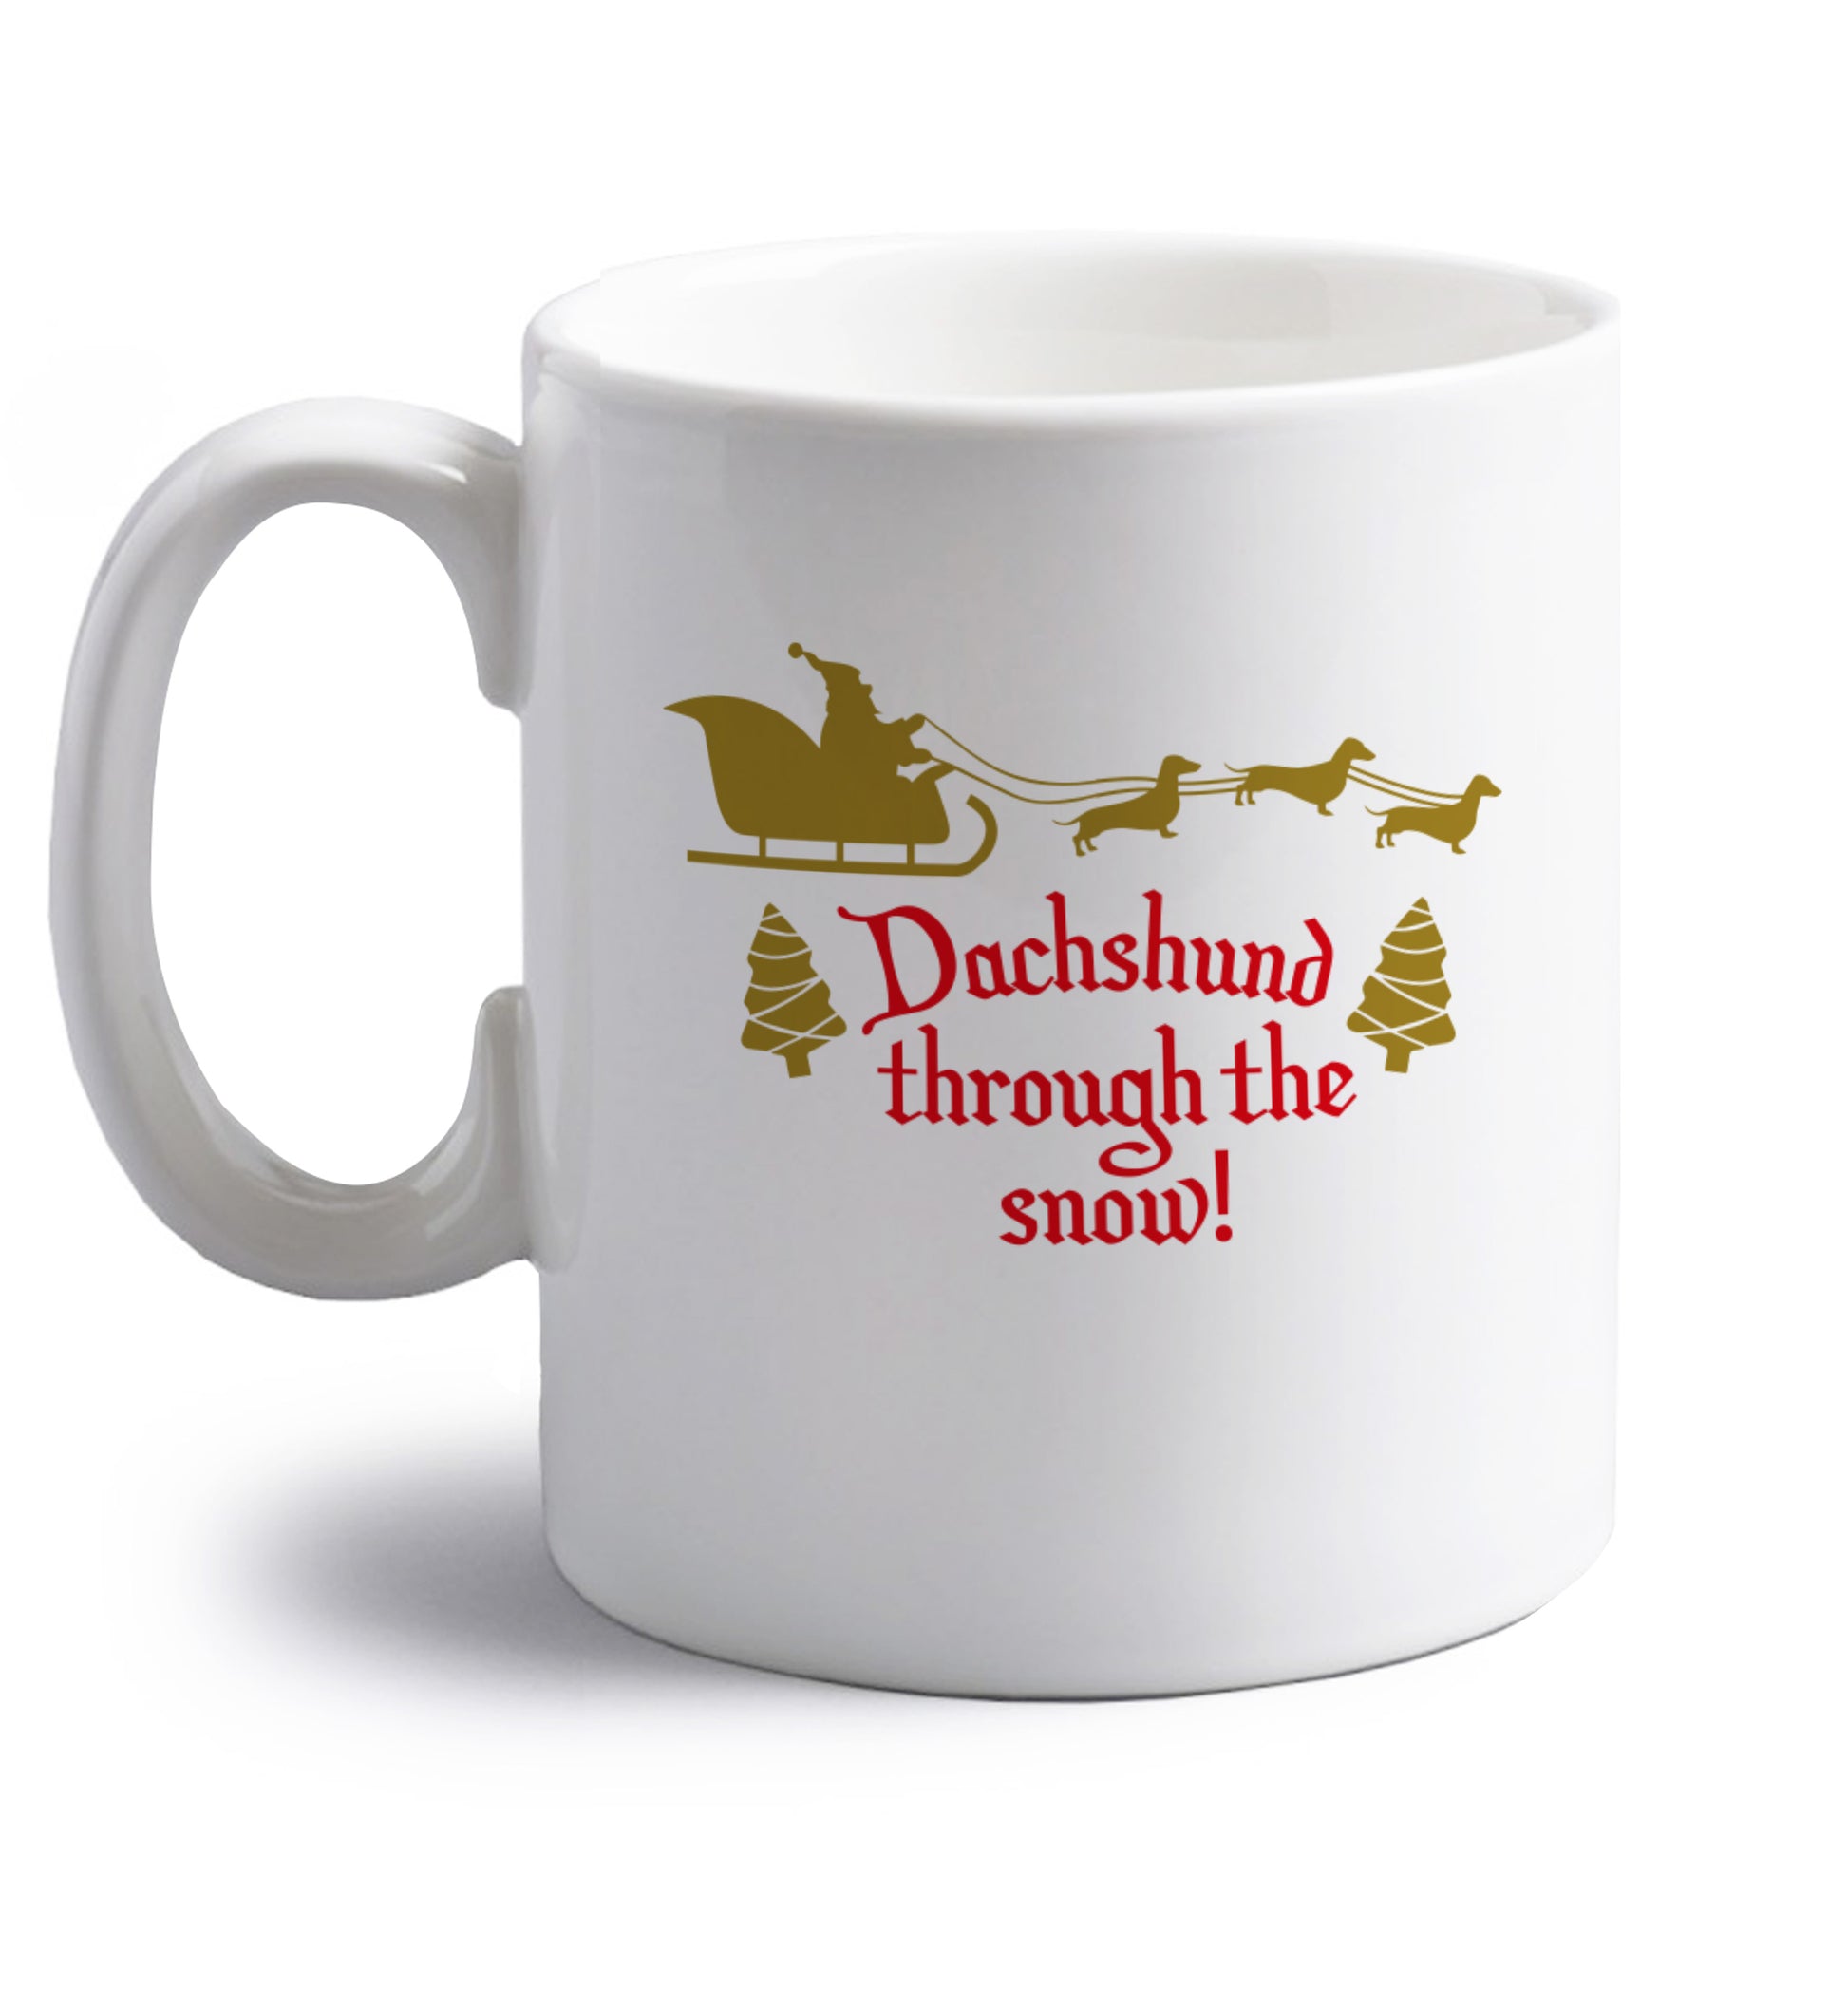 Dachshund through the snow right handed white ceramic mug 